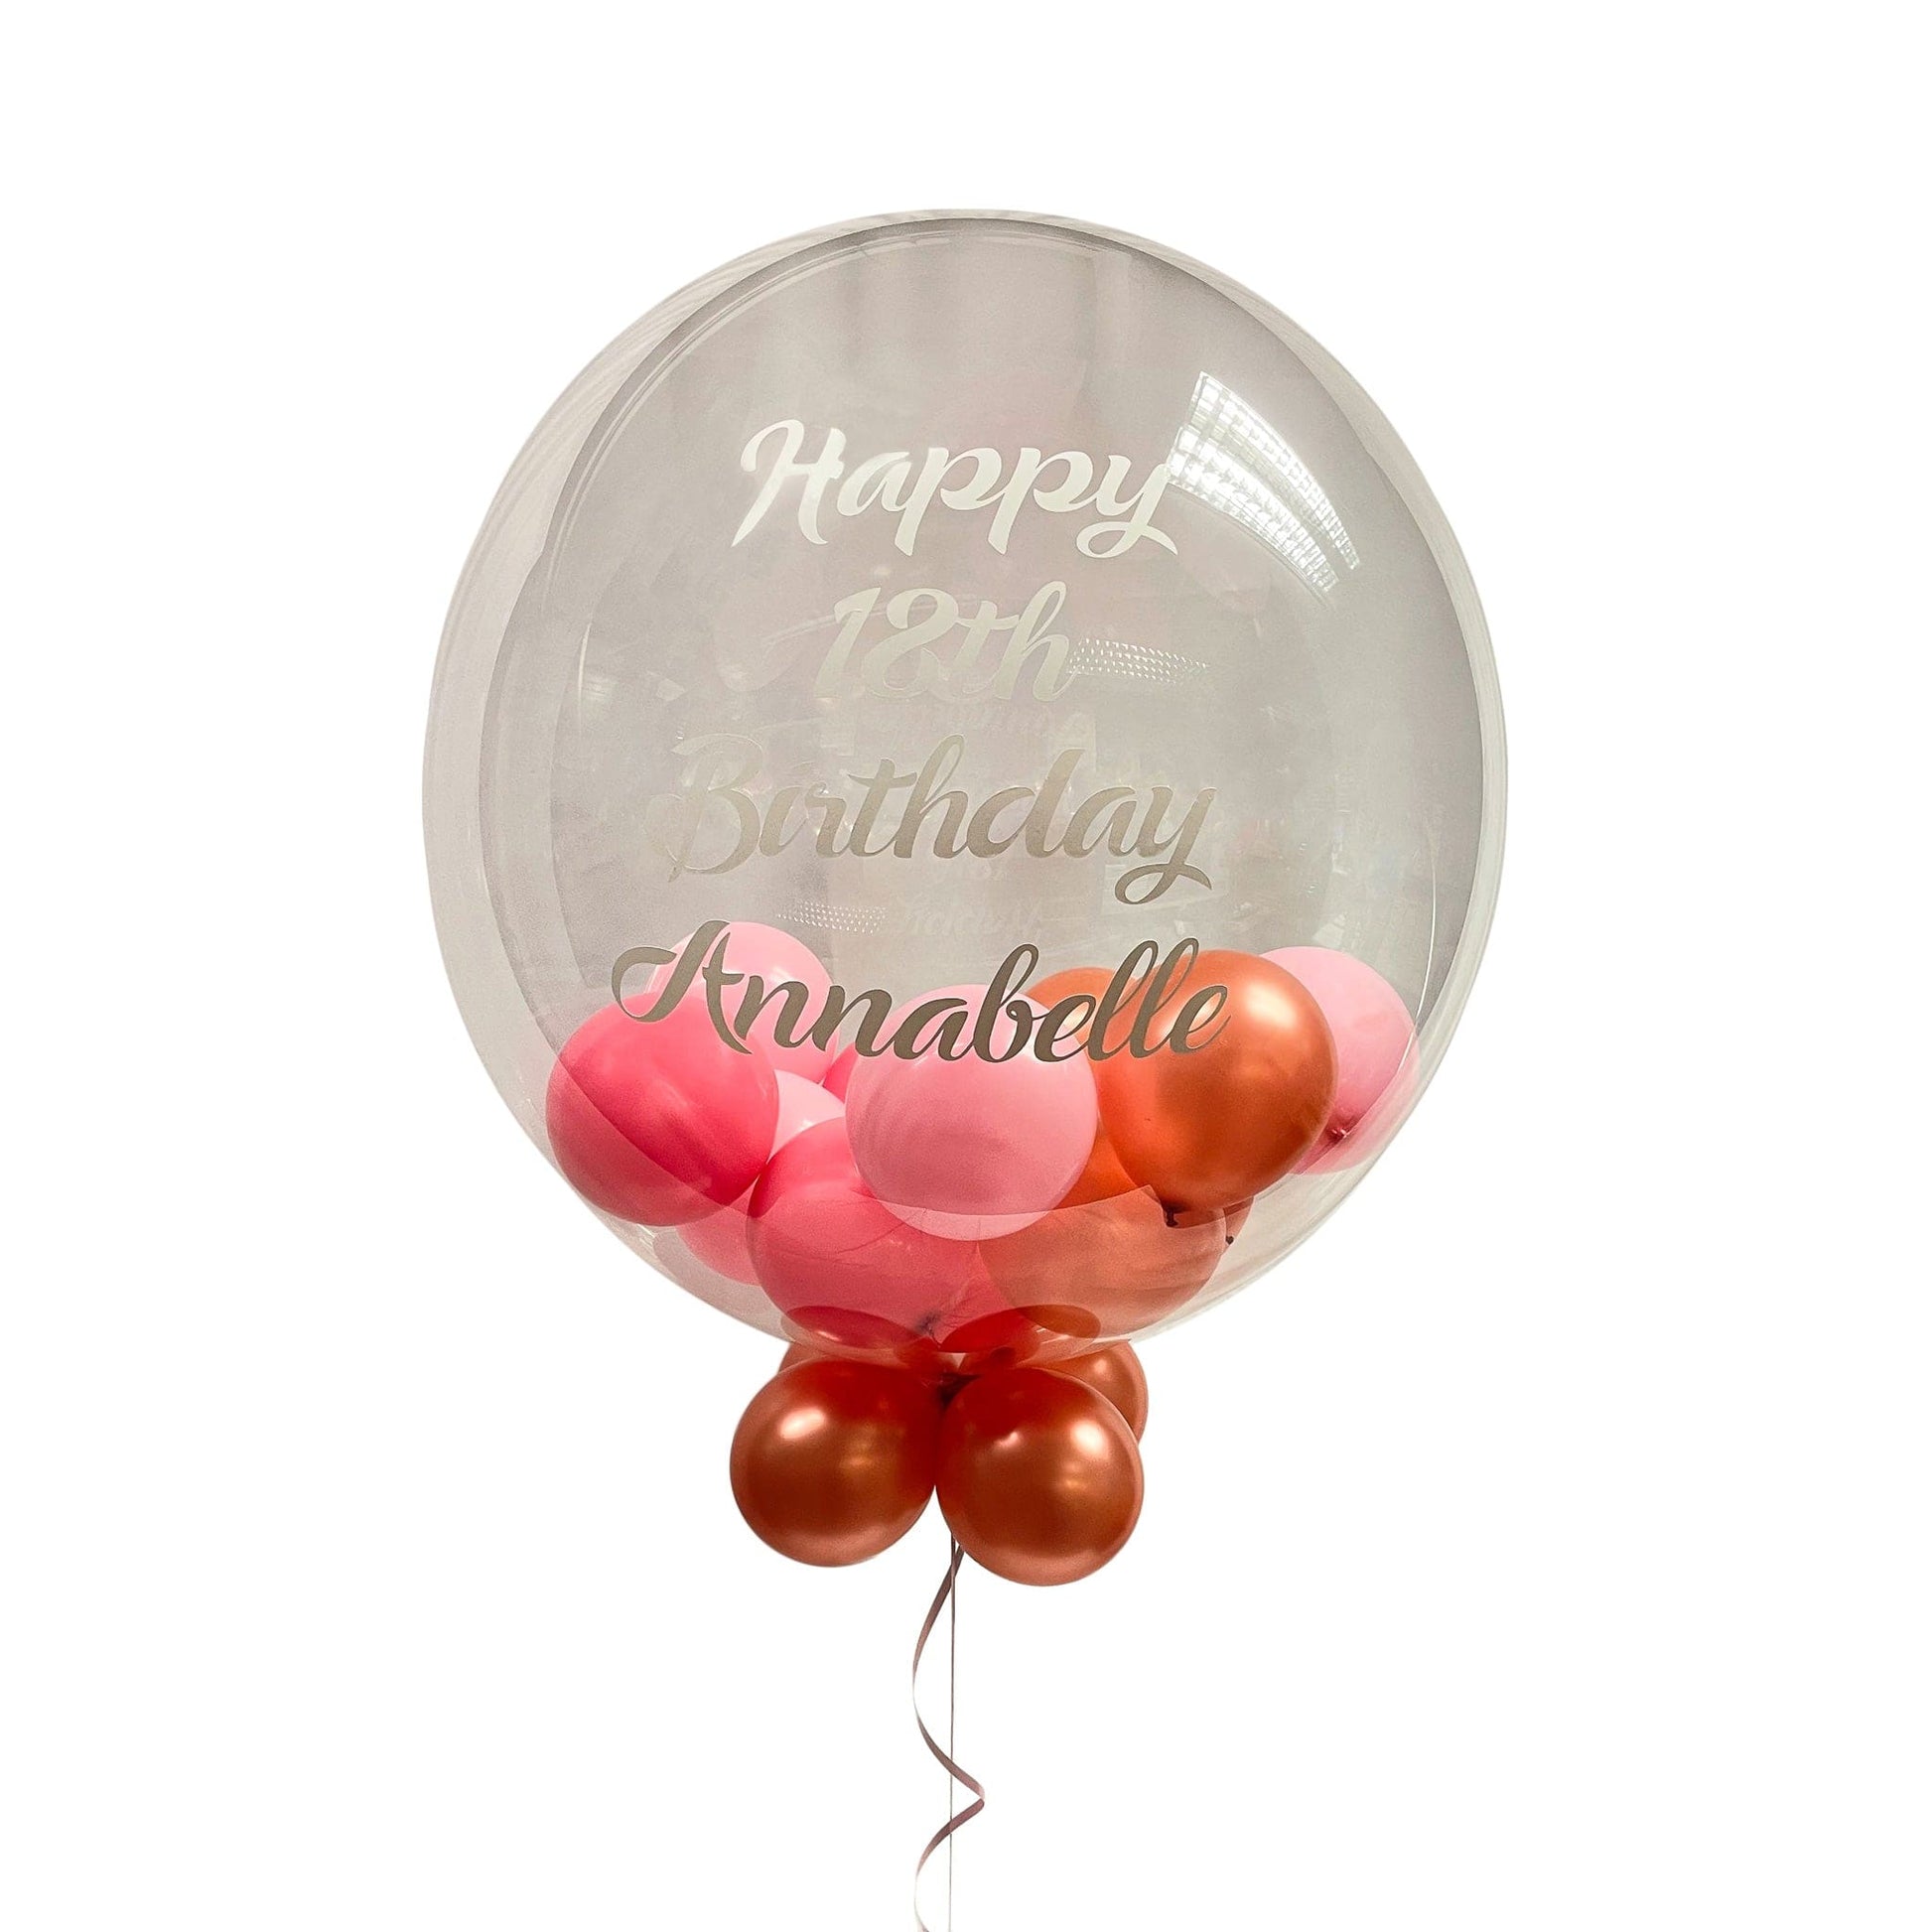 Castle Balloons Balloons Rose Bonbon Bubble with Vinyl Writing